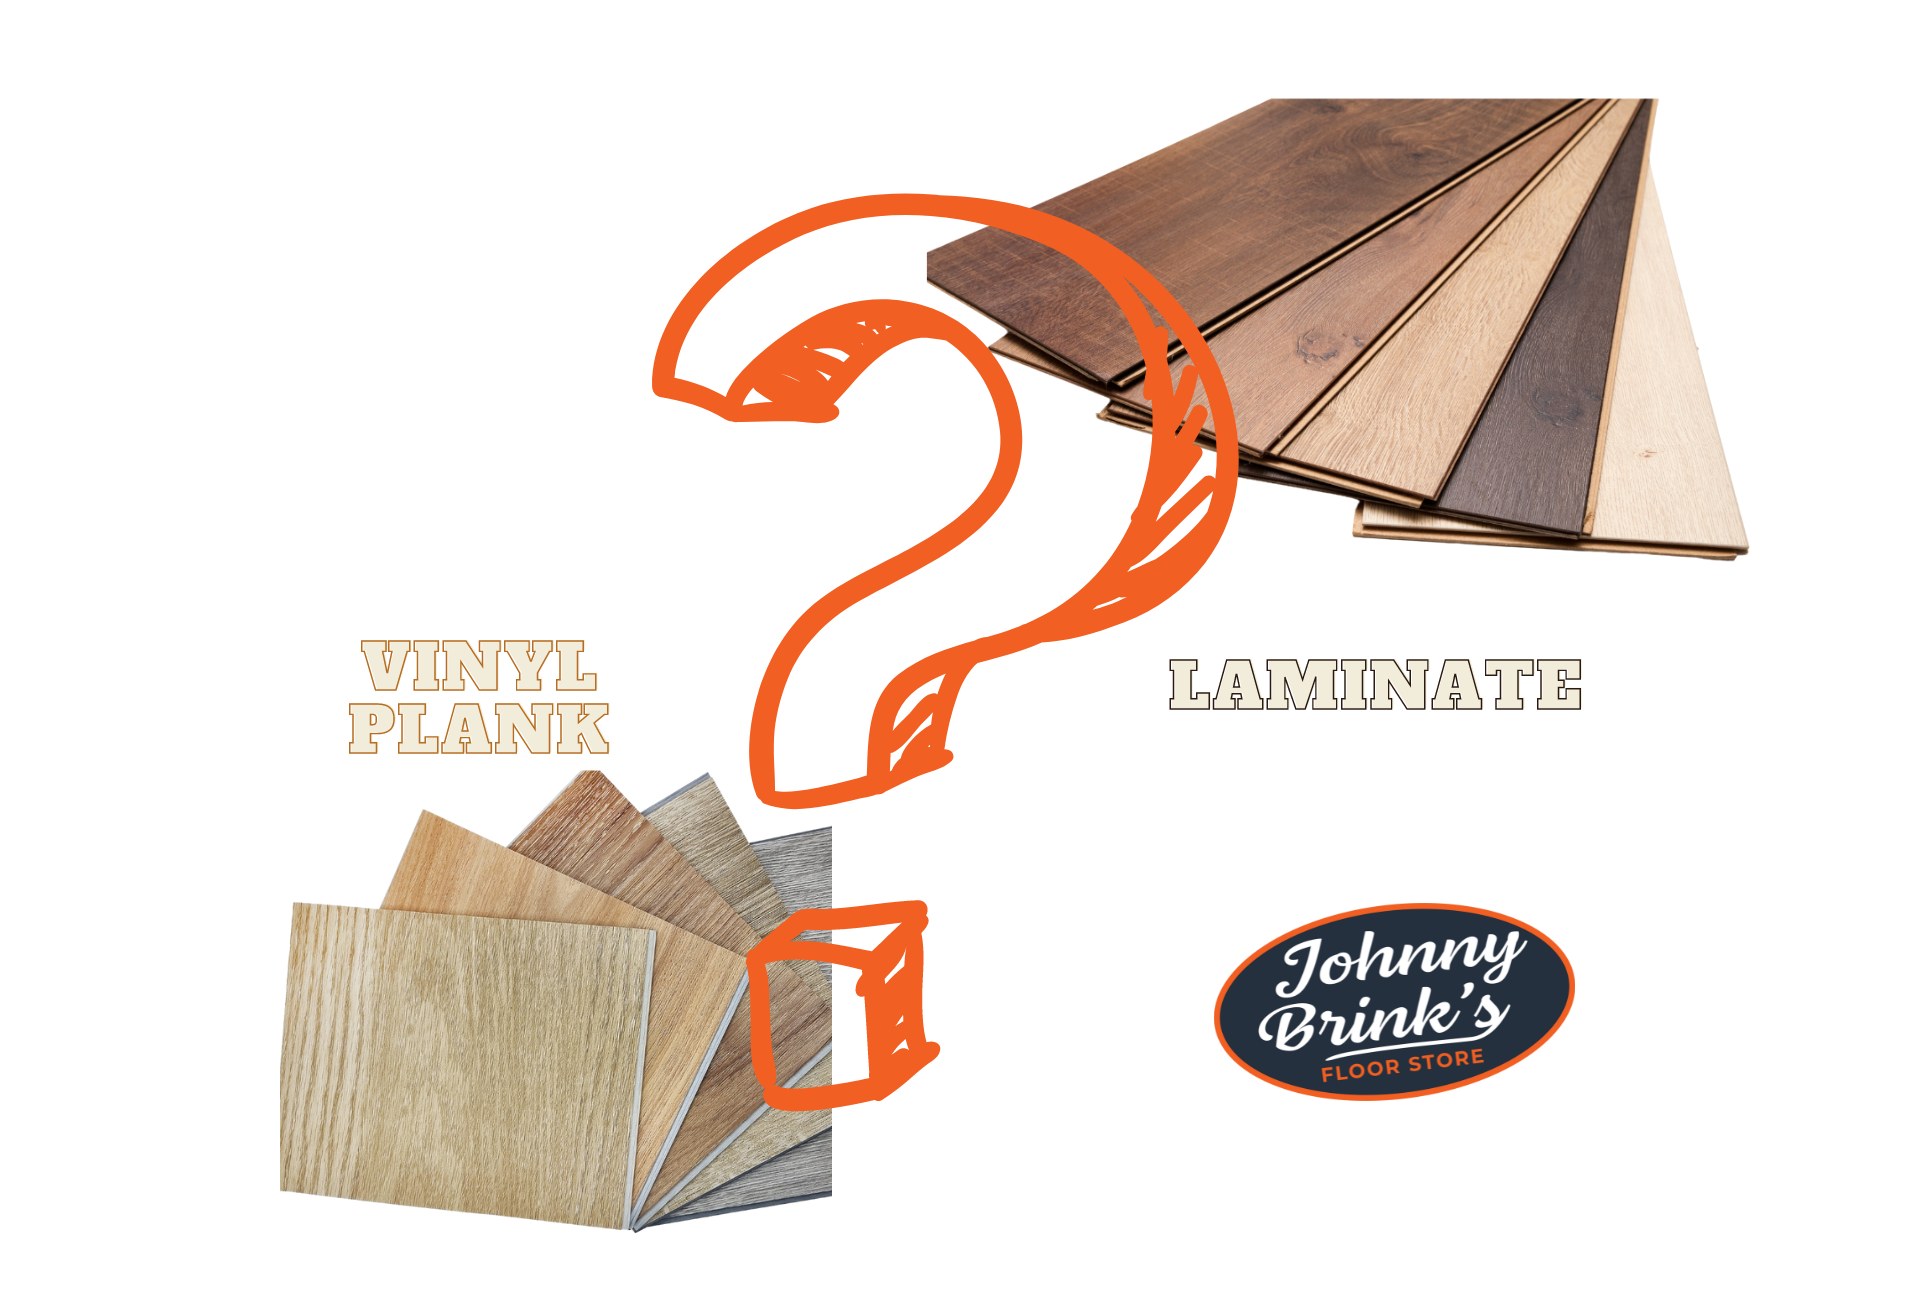 Understanding the difference between vinyl plank flooring and laminate flooring